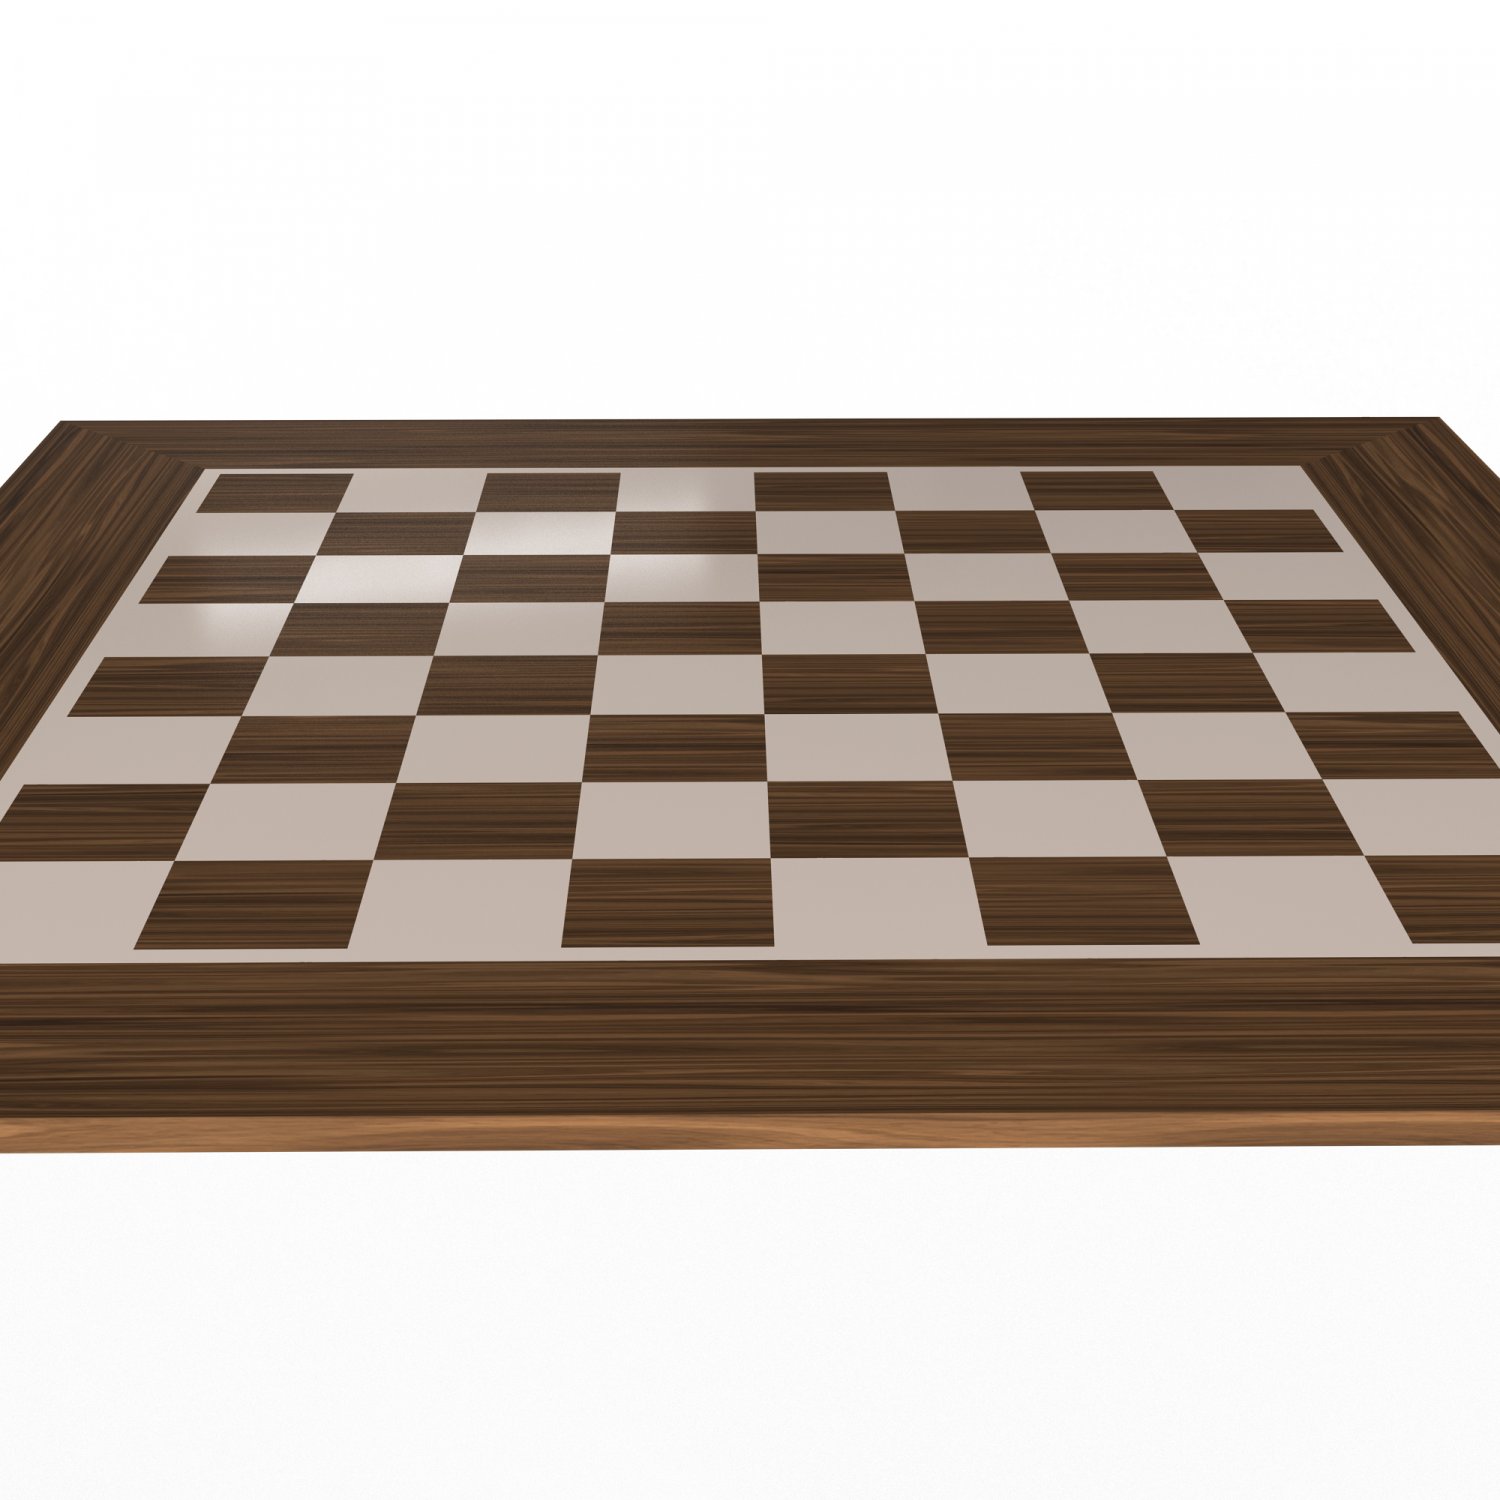 Bispo do jogo de xadrez Modelo 3D $29 - .fbx .max .obj - Free3D